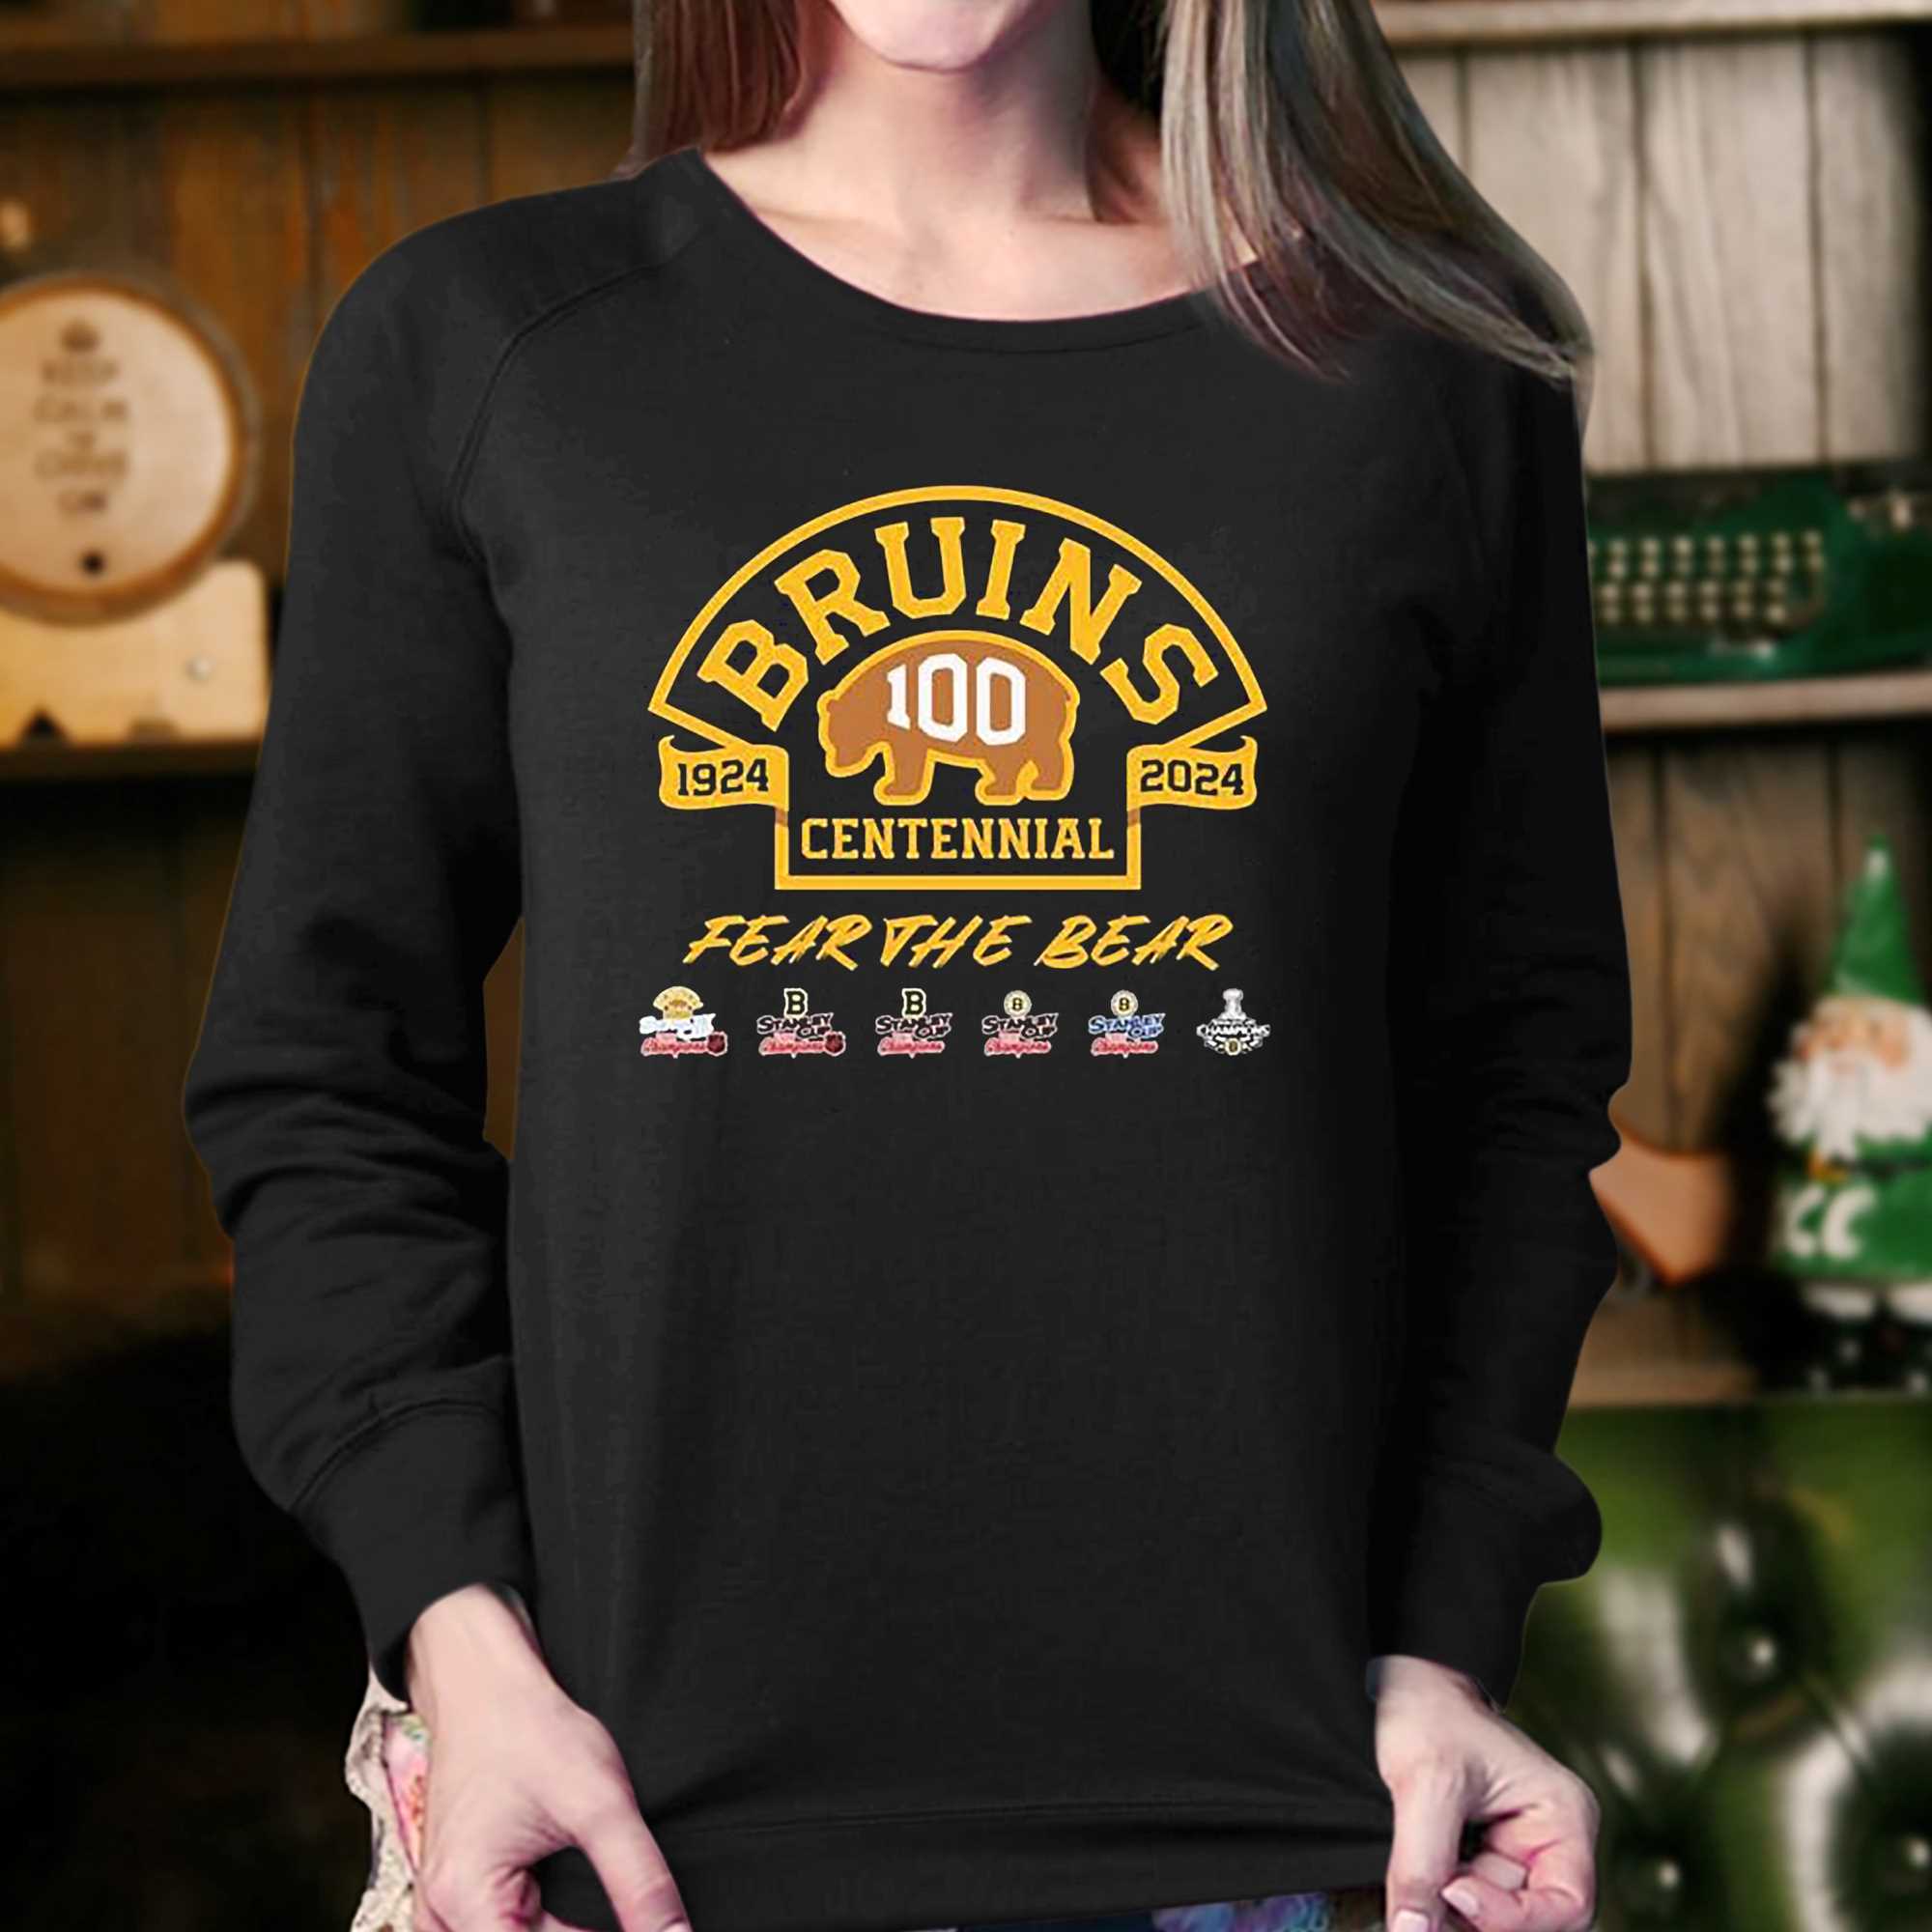 Boston Bruins Gear, Bruins 100th Year Jerseys, Boston Bruins